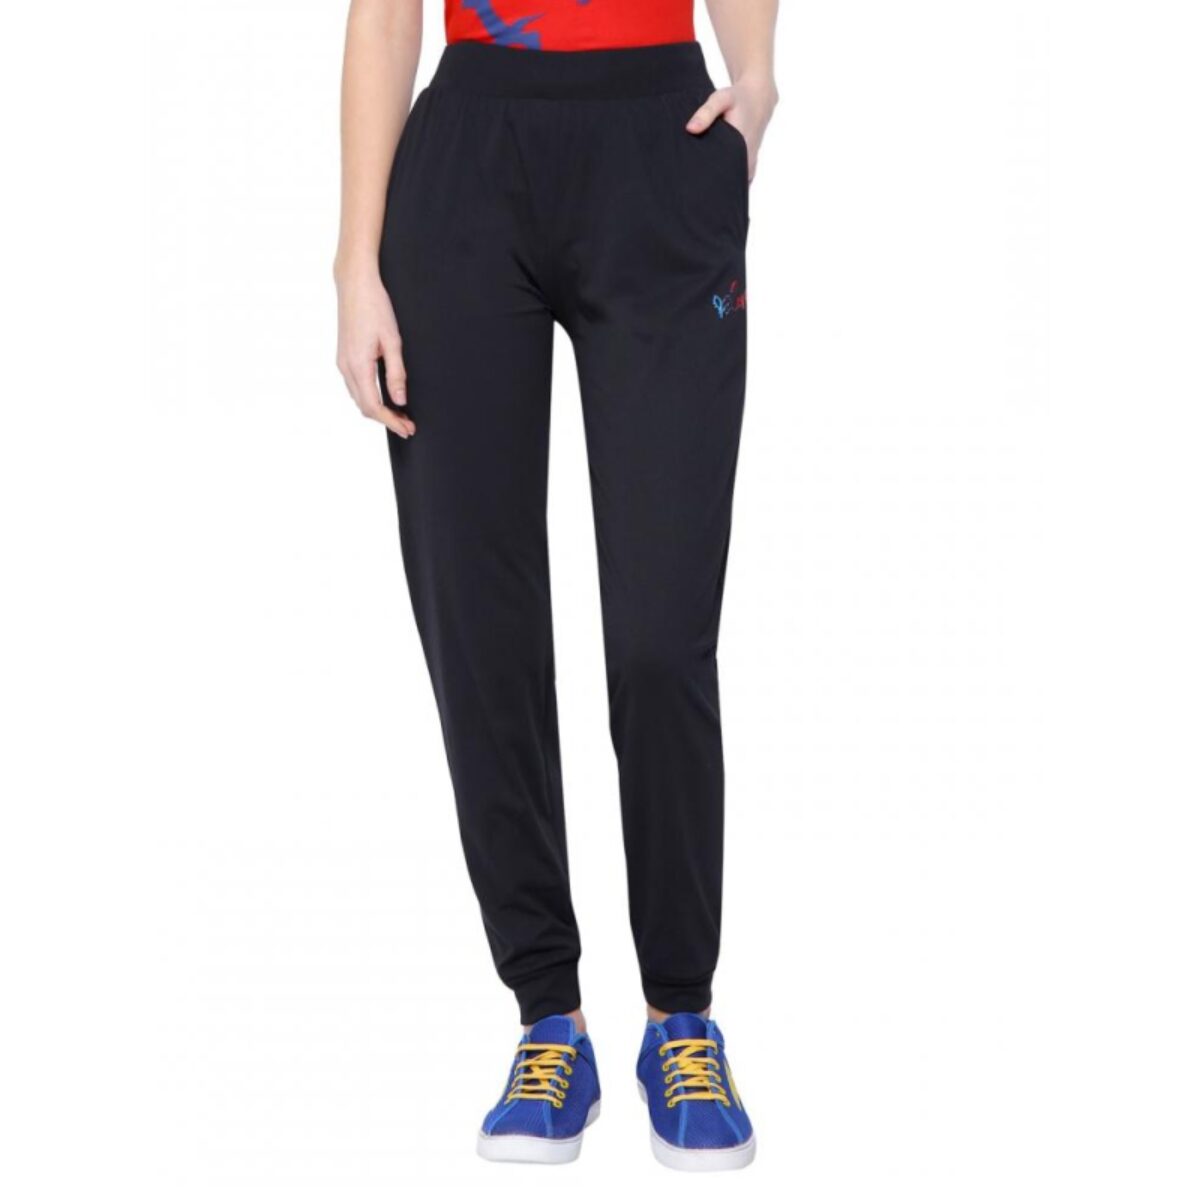 L. PANTS Tennis pants - Women - Diadora Online Store US